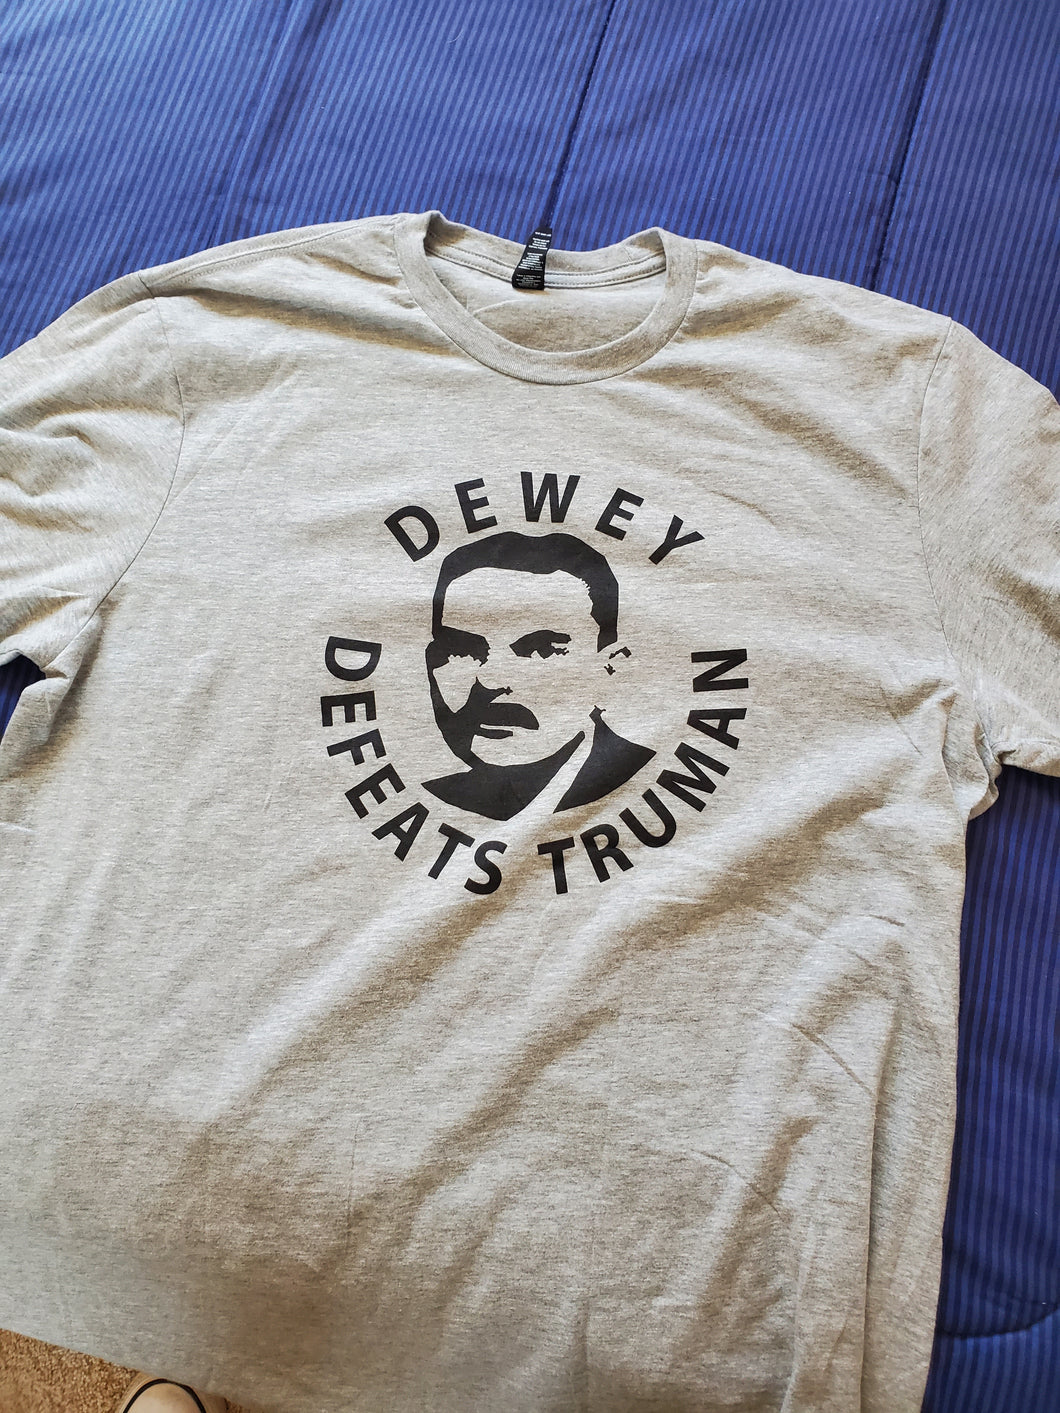 Dewey Defeats Truman Campaign Button T-Shirt